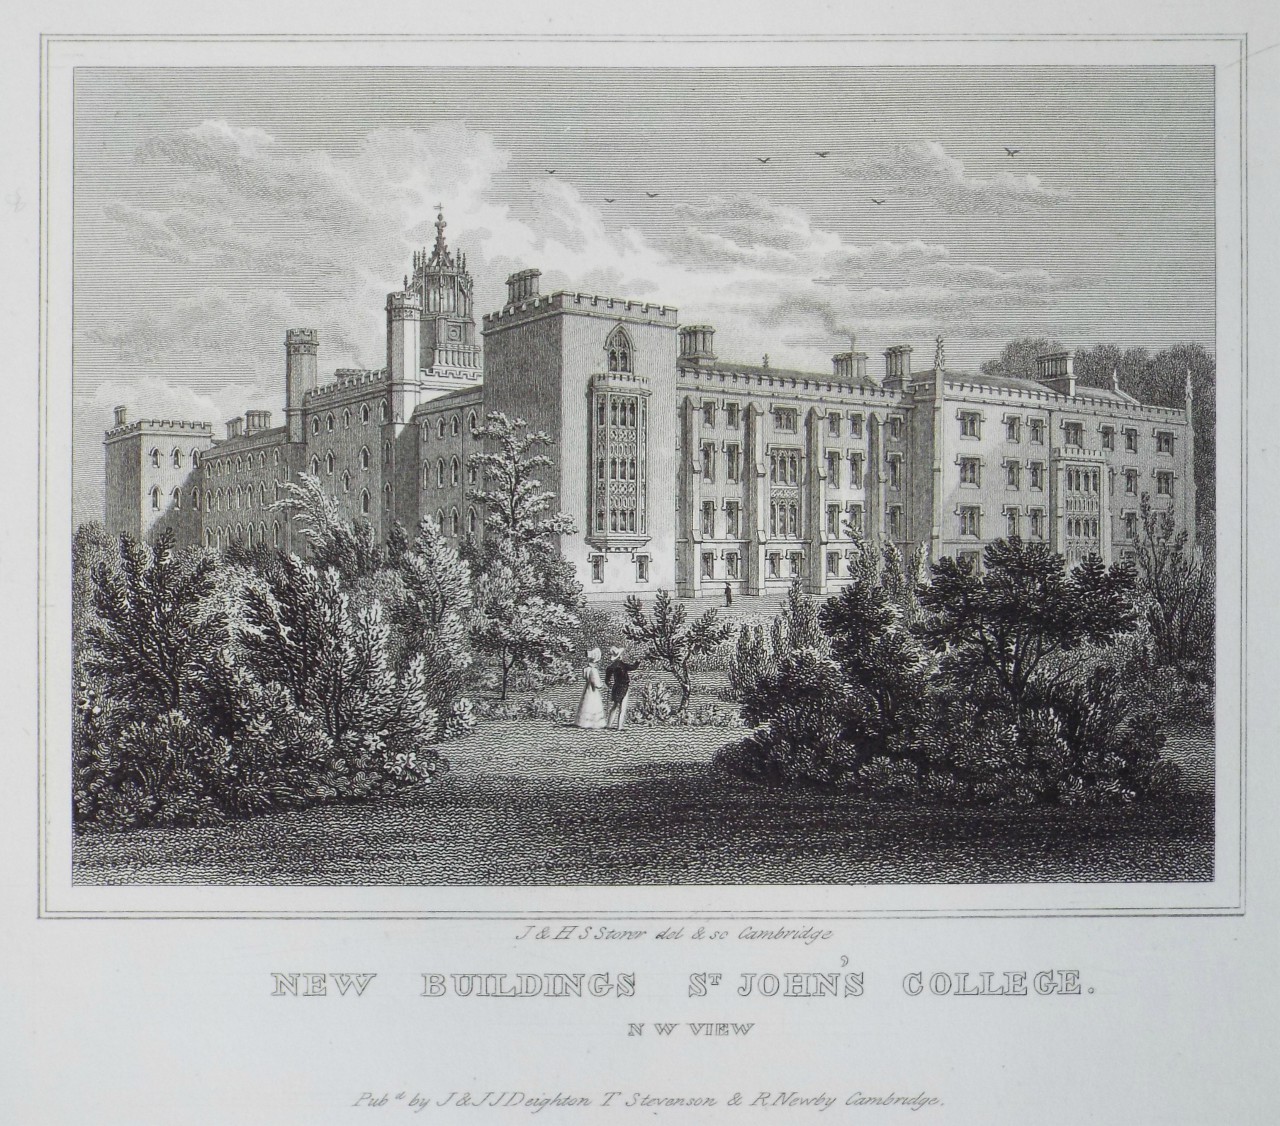 Print - New Buildings St. John's College. N W View - Storer